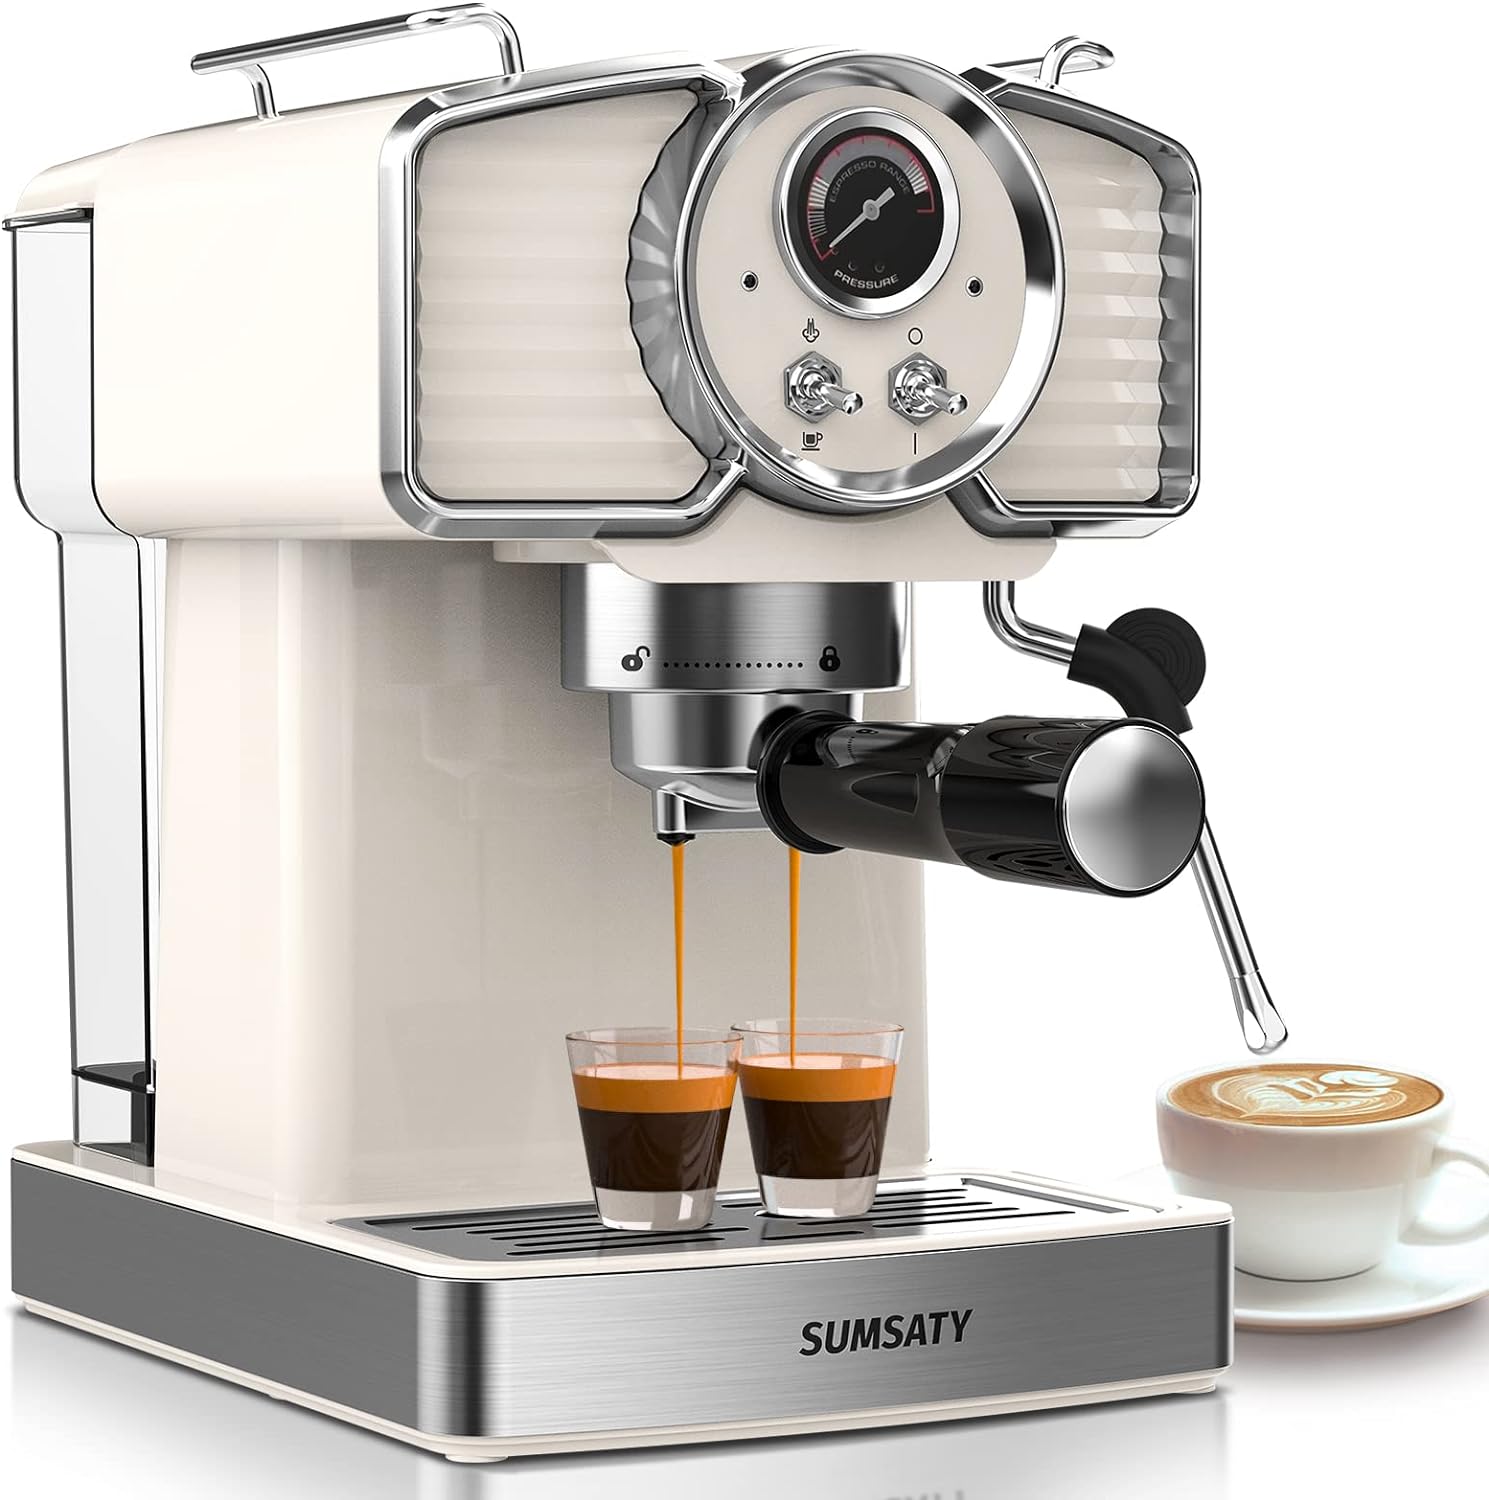 SUMSATY Espresso Coffee Machine 20 Bar Review